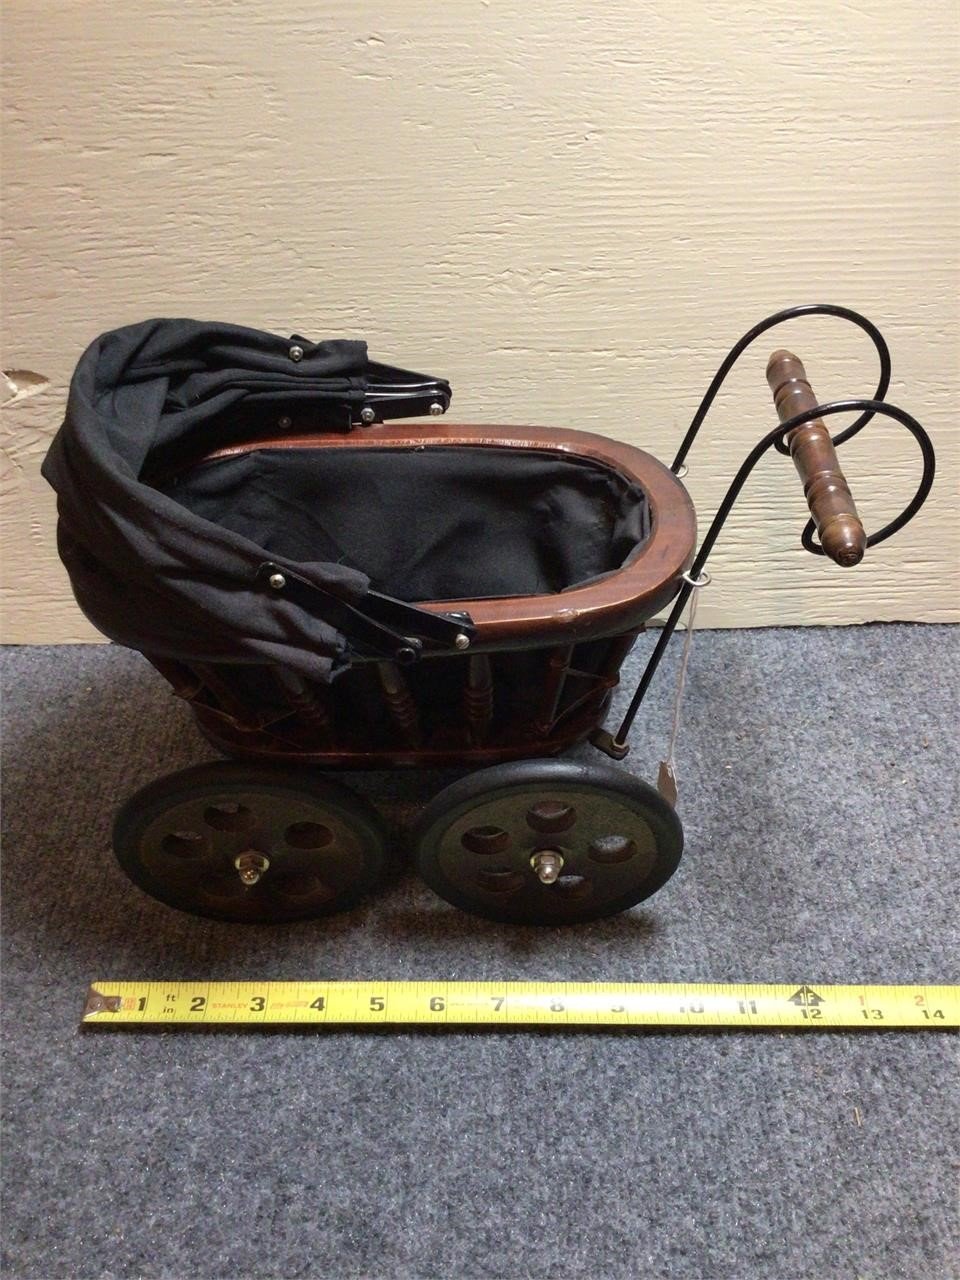 Miniature Baby Doll Stroller